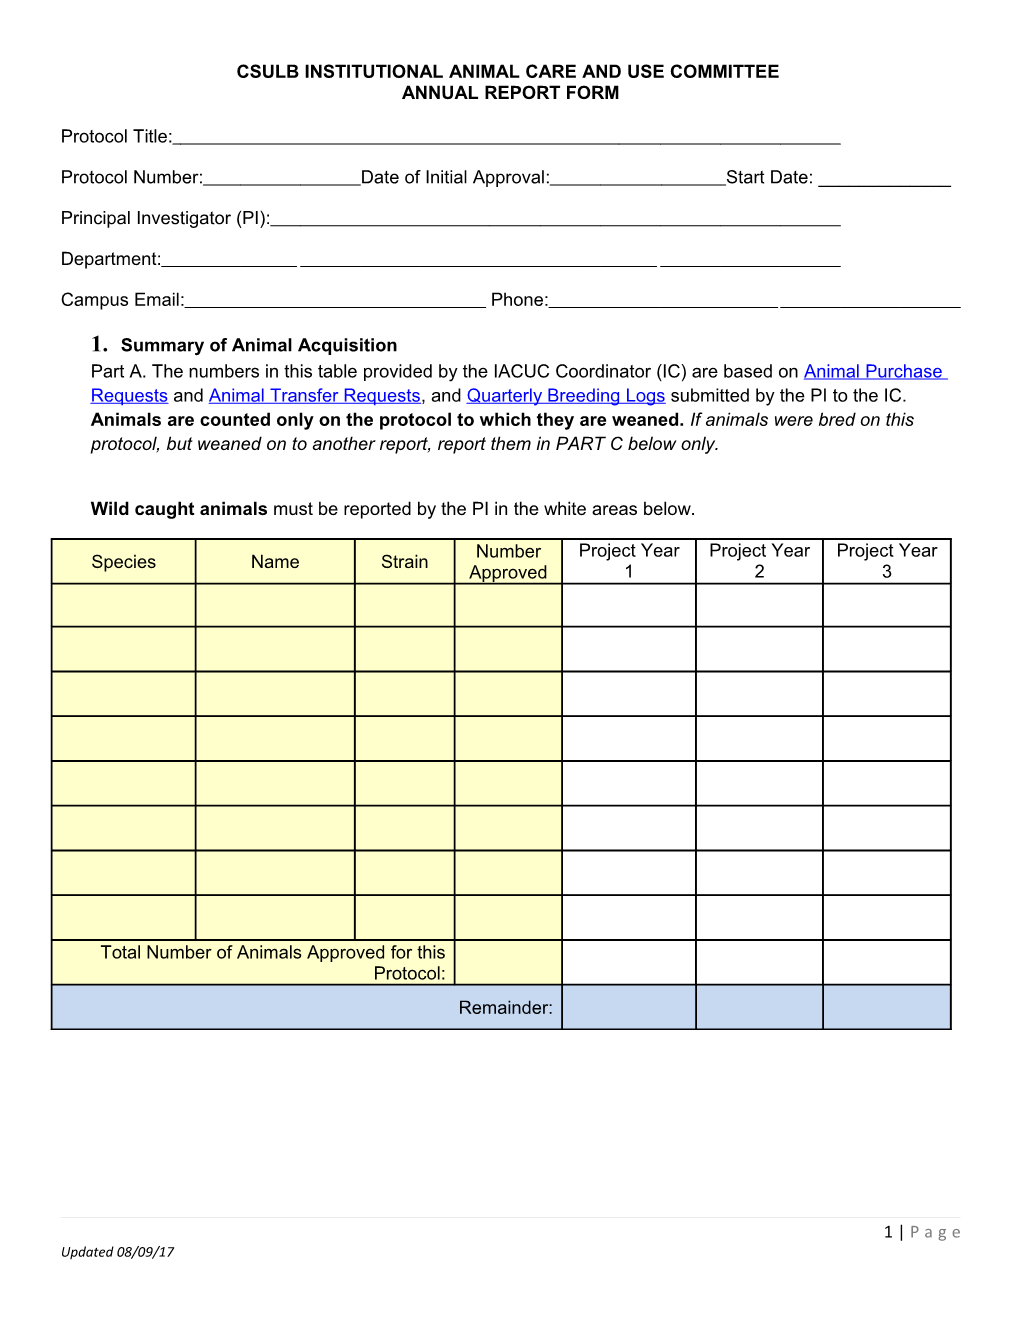 CSULB IACUC Annual Report Form